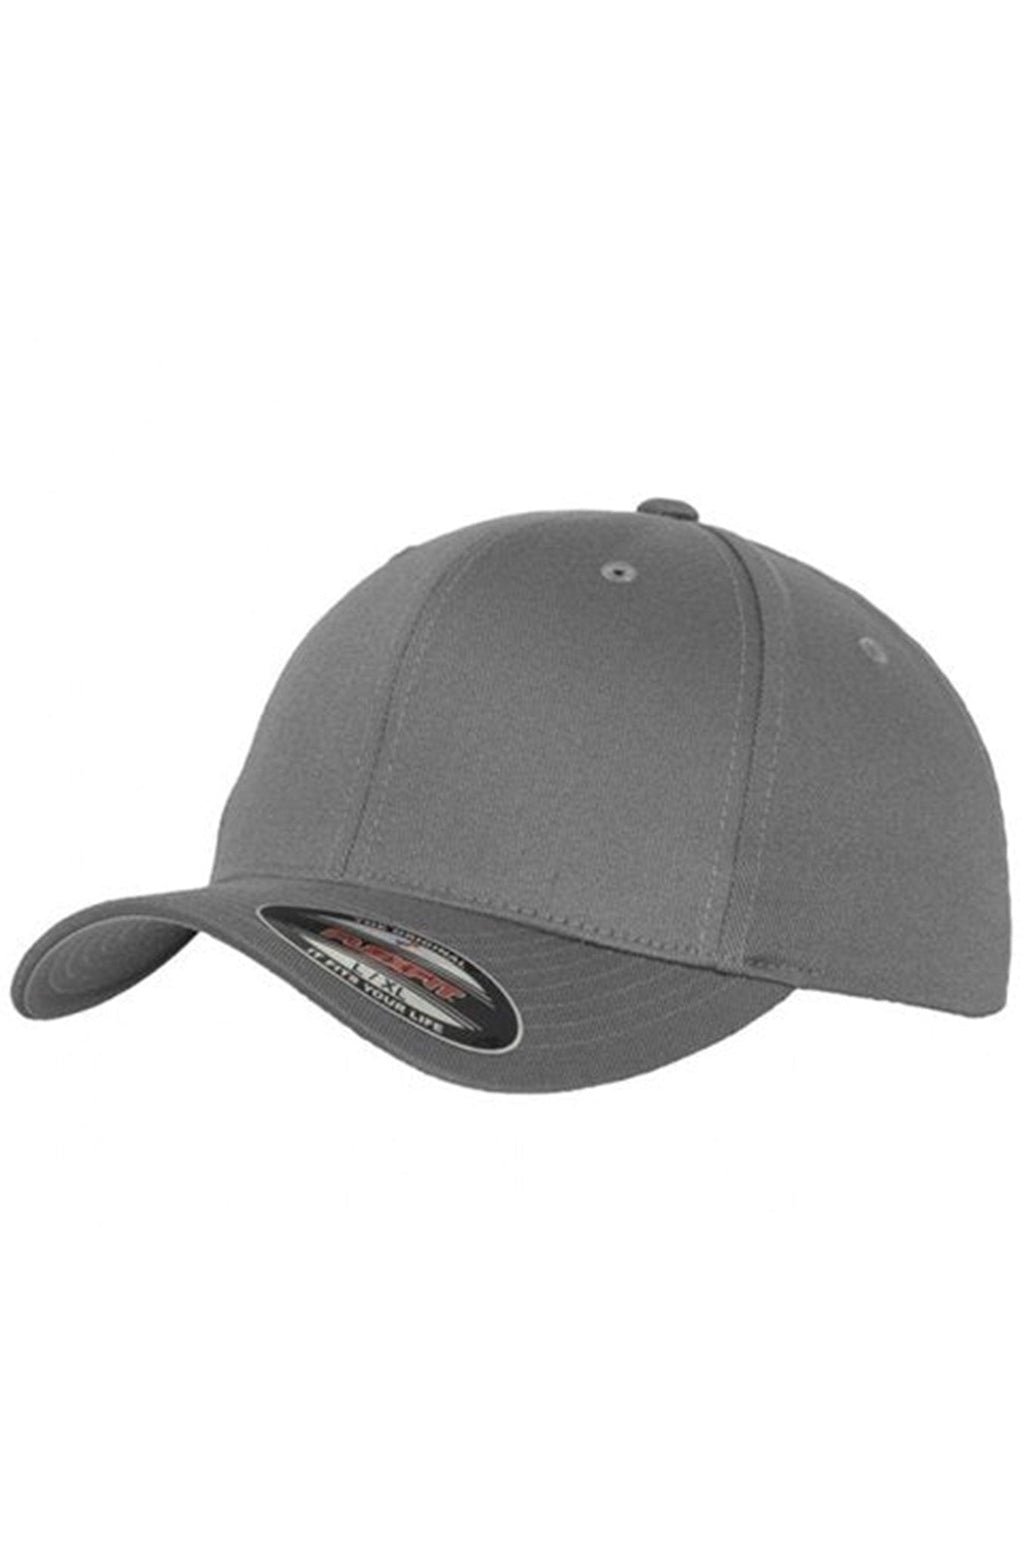 „Flexfit“ originalus beisbolo kepuraitė - šviesiai pilka